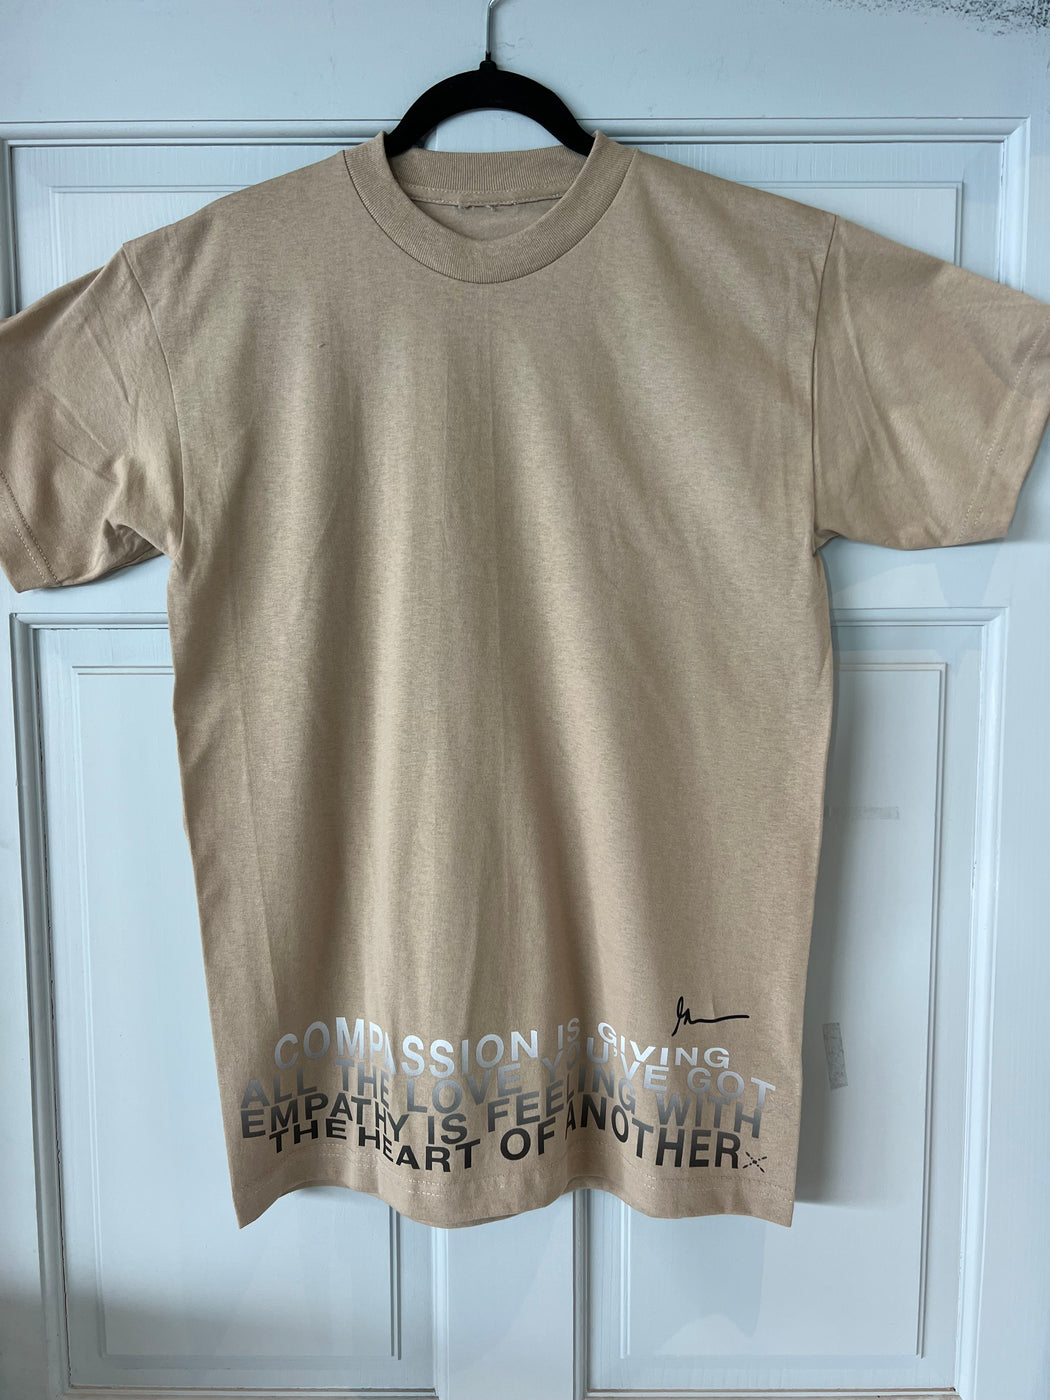 Unisex Compassion Crewneck Short sleeve tee shirt in Sand